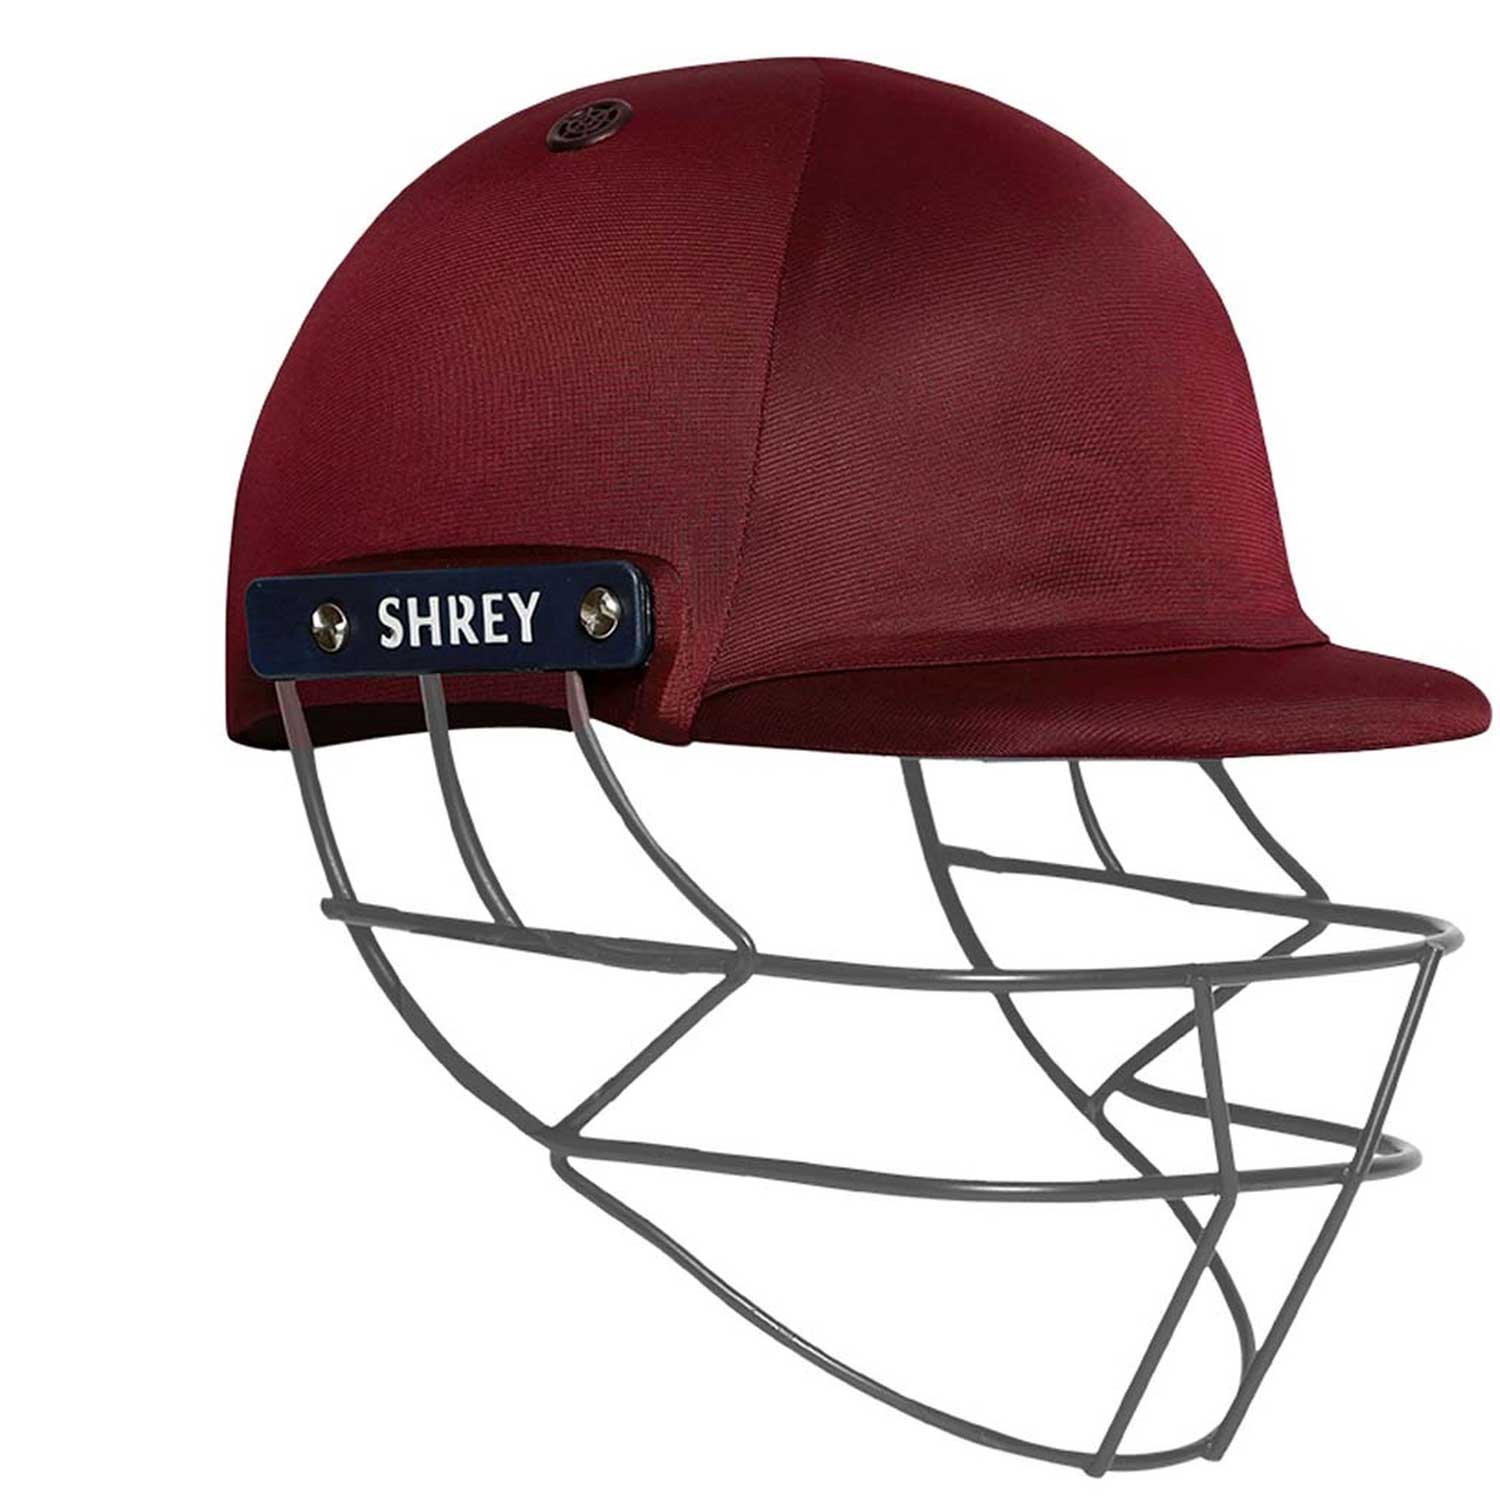 Shrey Performance 2.0 Senior Cricket Helmet